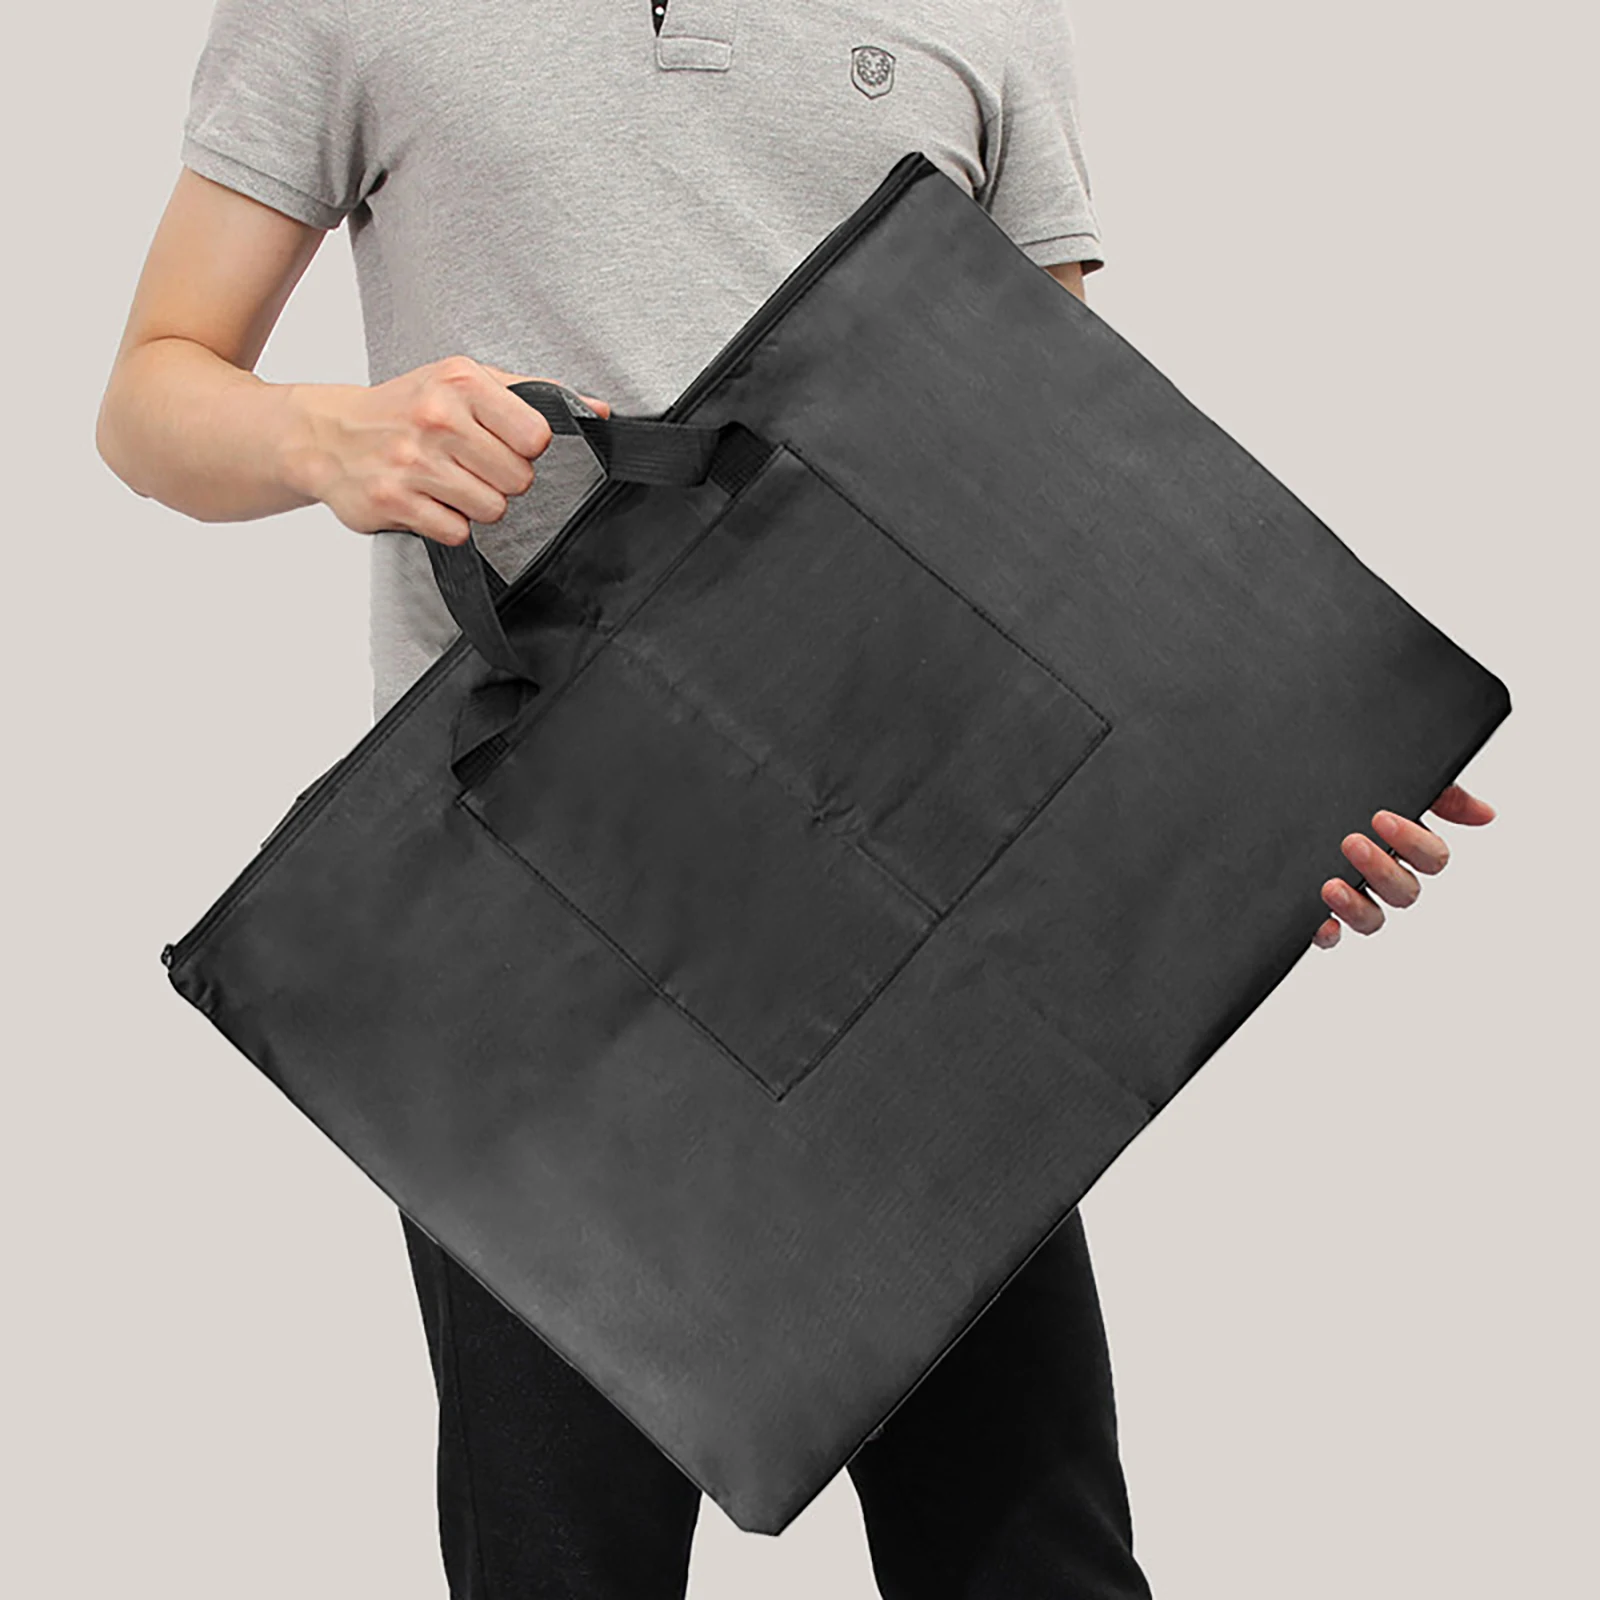 Paterr 4 Pcs Large Size Art Portfolio Case Art Portfolio Tote with Nylon  Shoulder Black Waterproof Portfolio Bag for Poster Board Storage Student